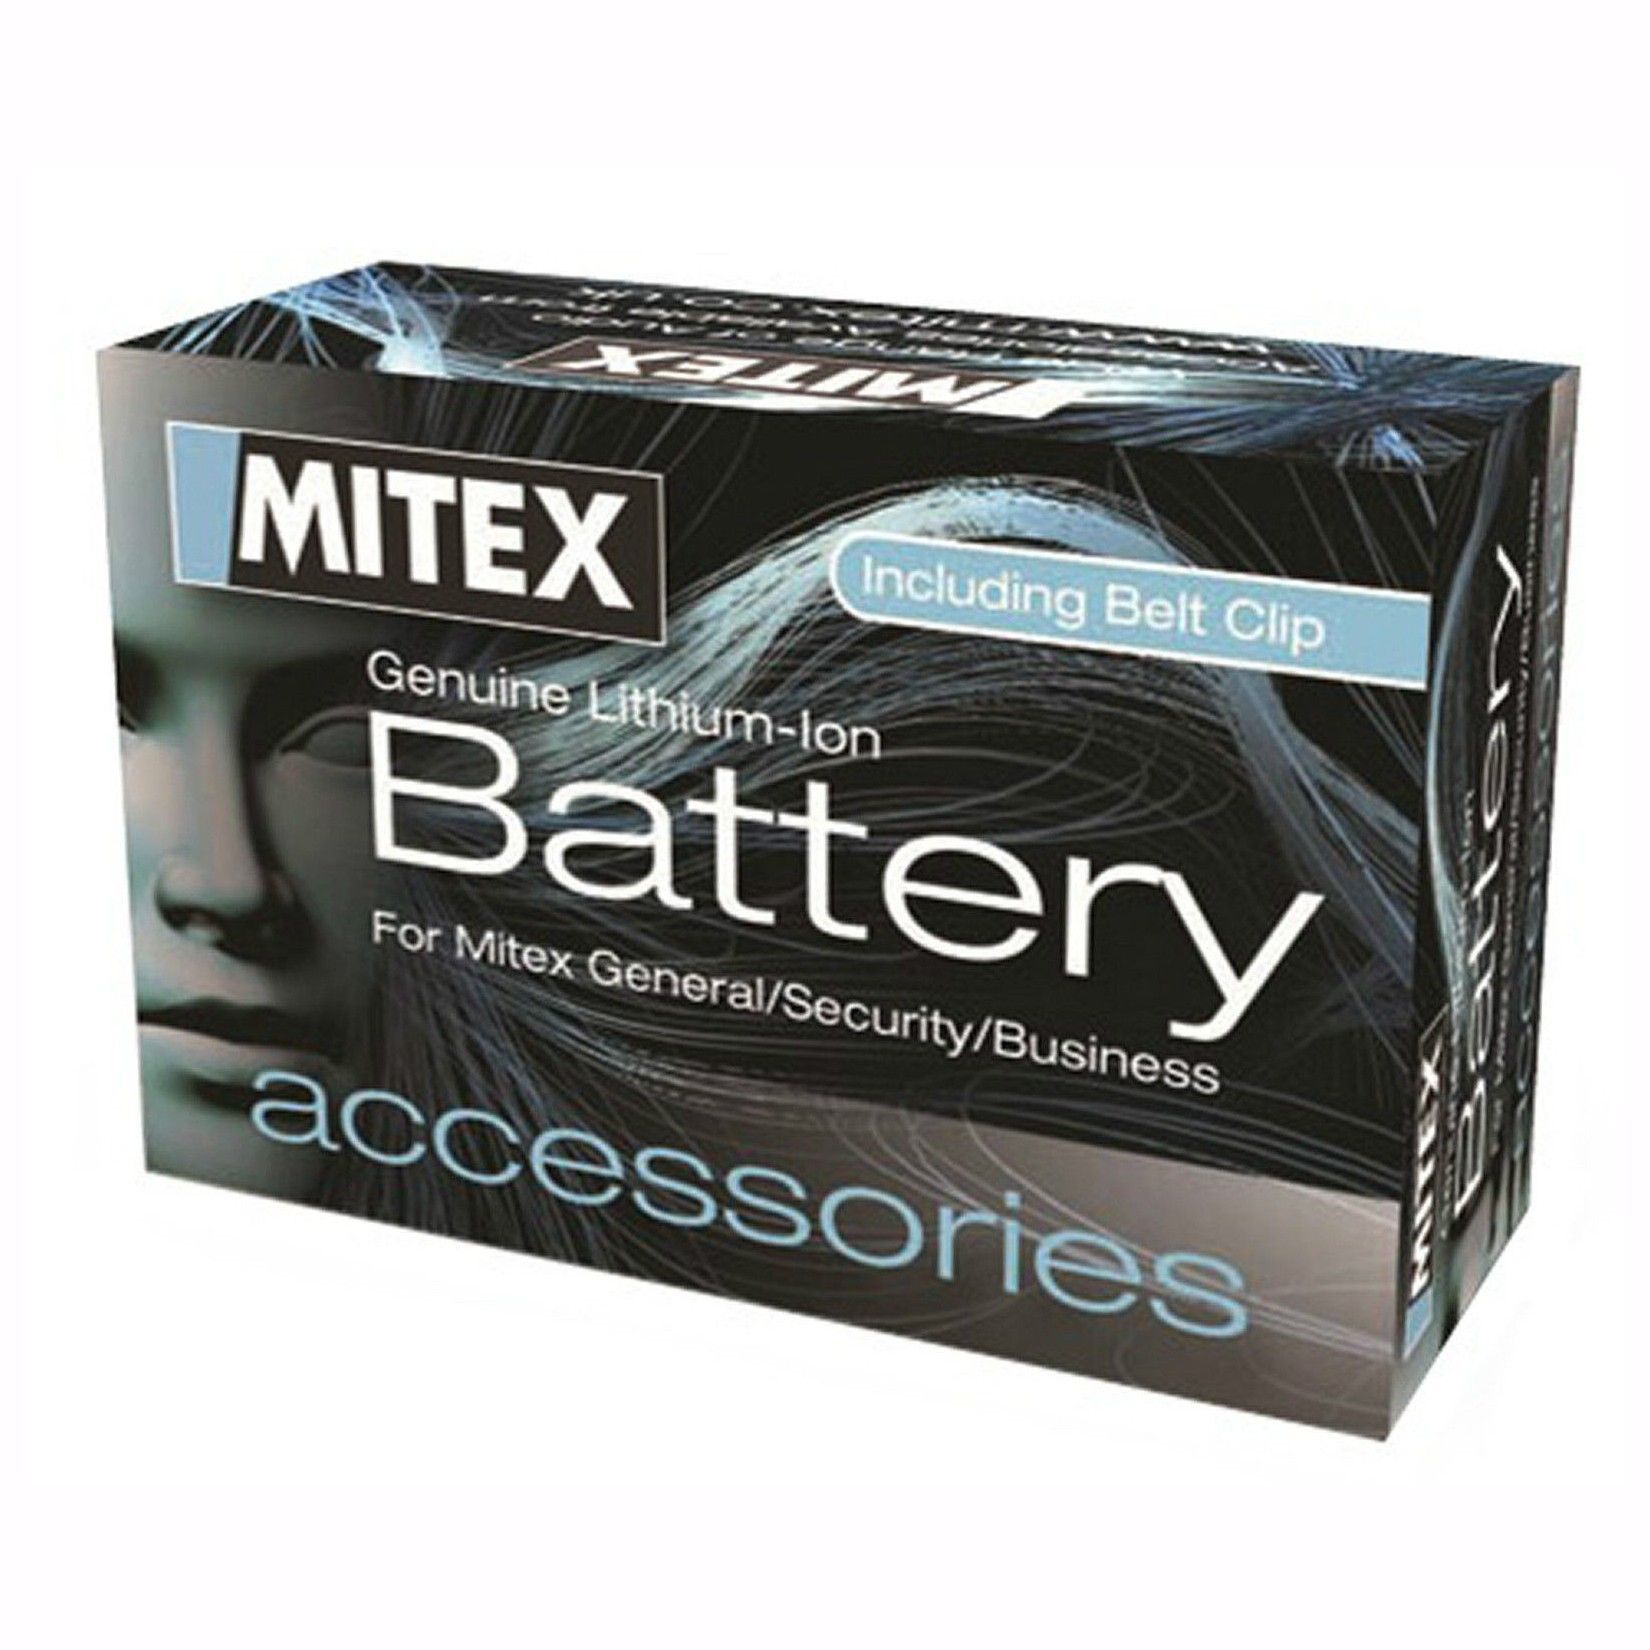 Mitex General Xtreme (GeneralX), DMR and 446X2 1500 mAh Battery Pack